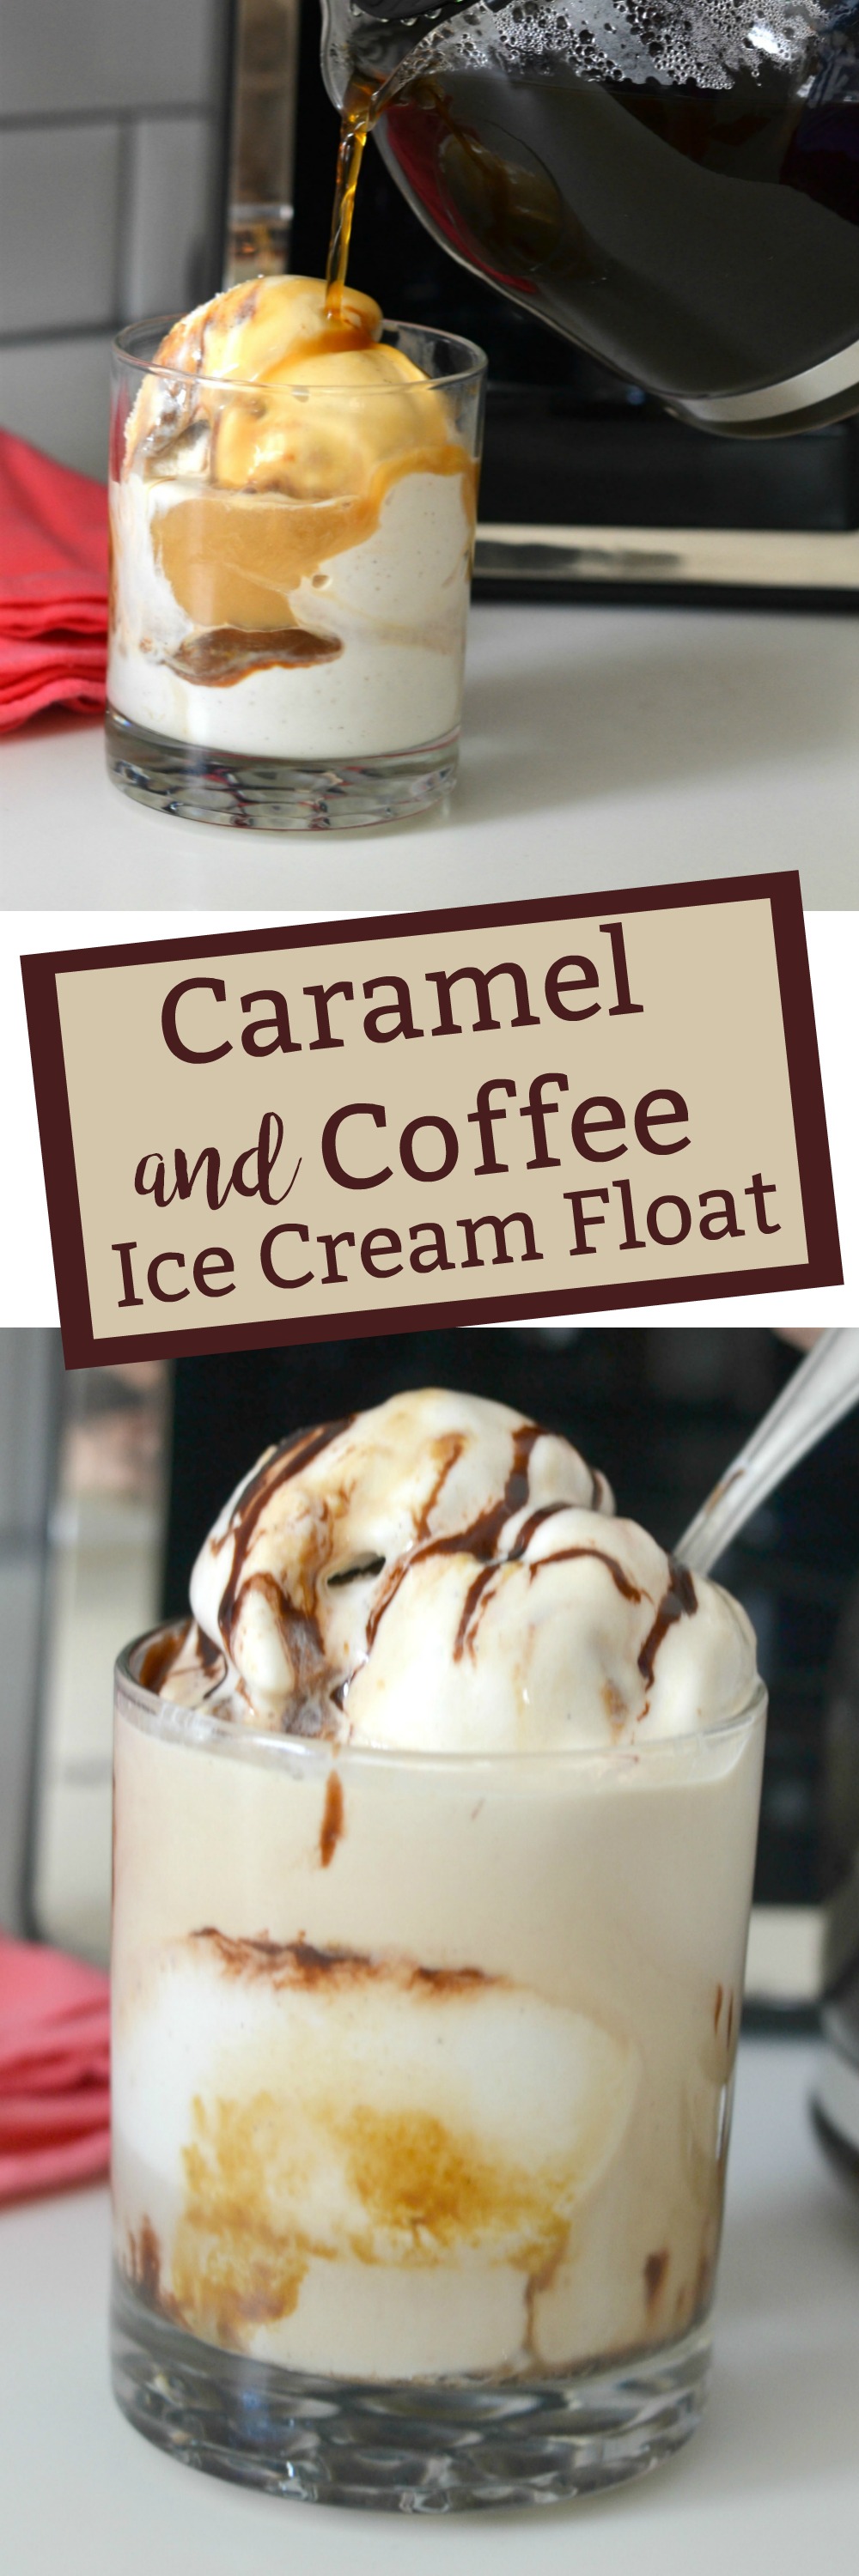 Caramel and Coffee Ice Cream Float